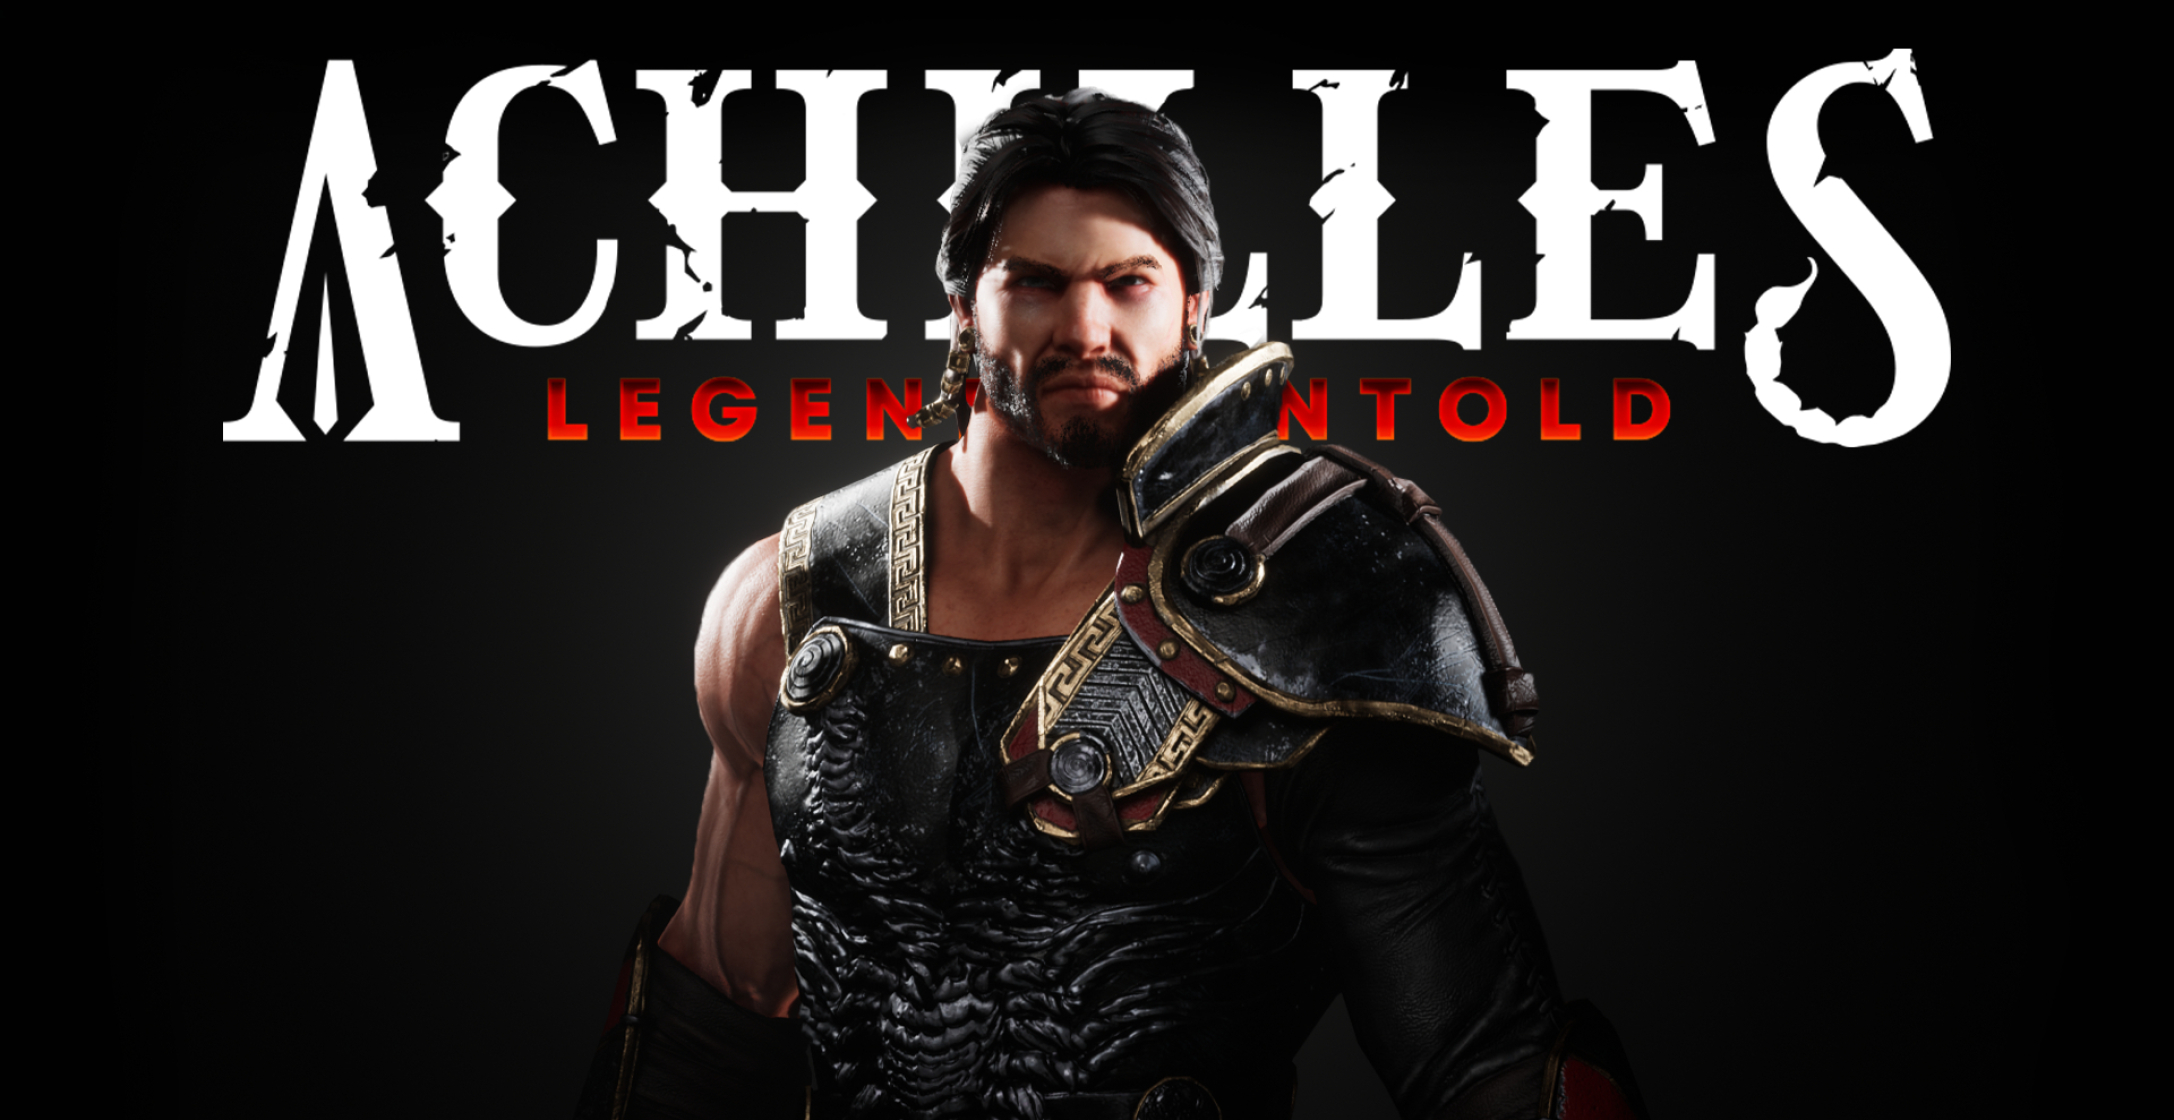 Achilles Legends Untold download the new version for apple